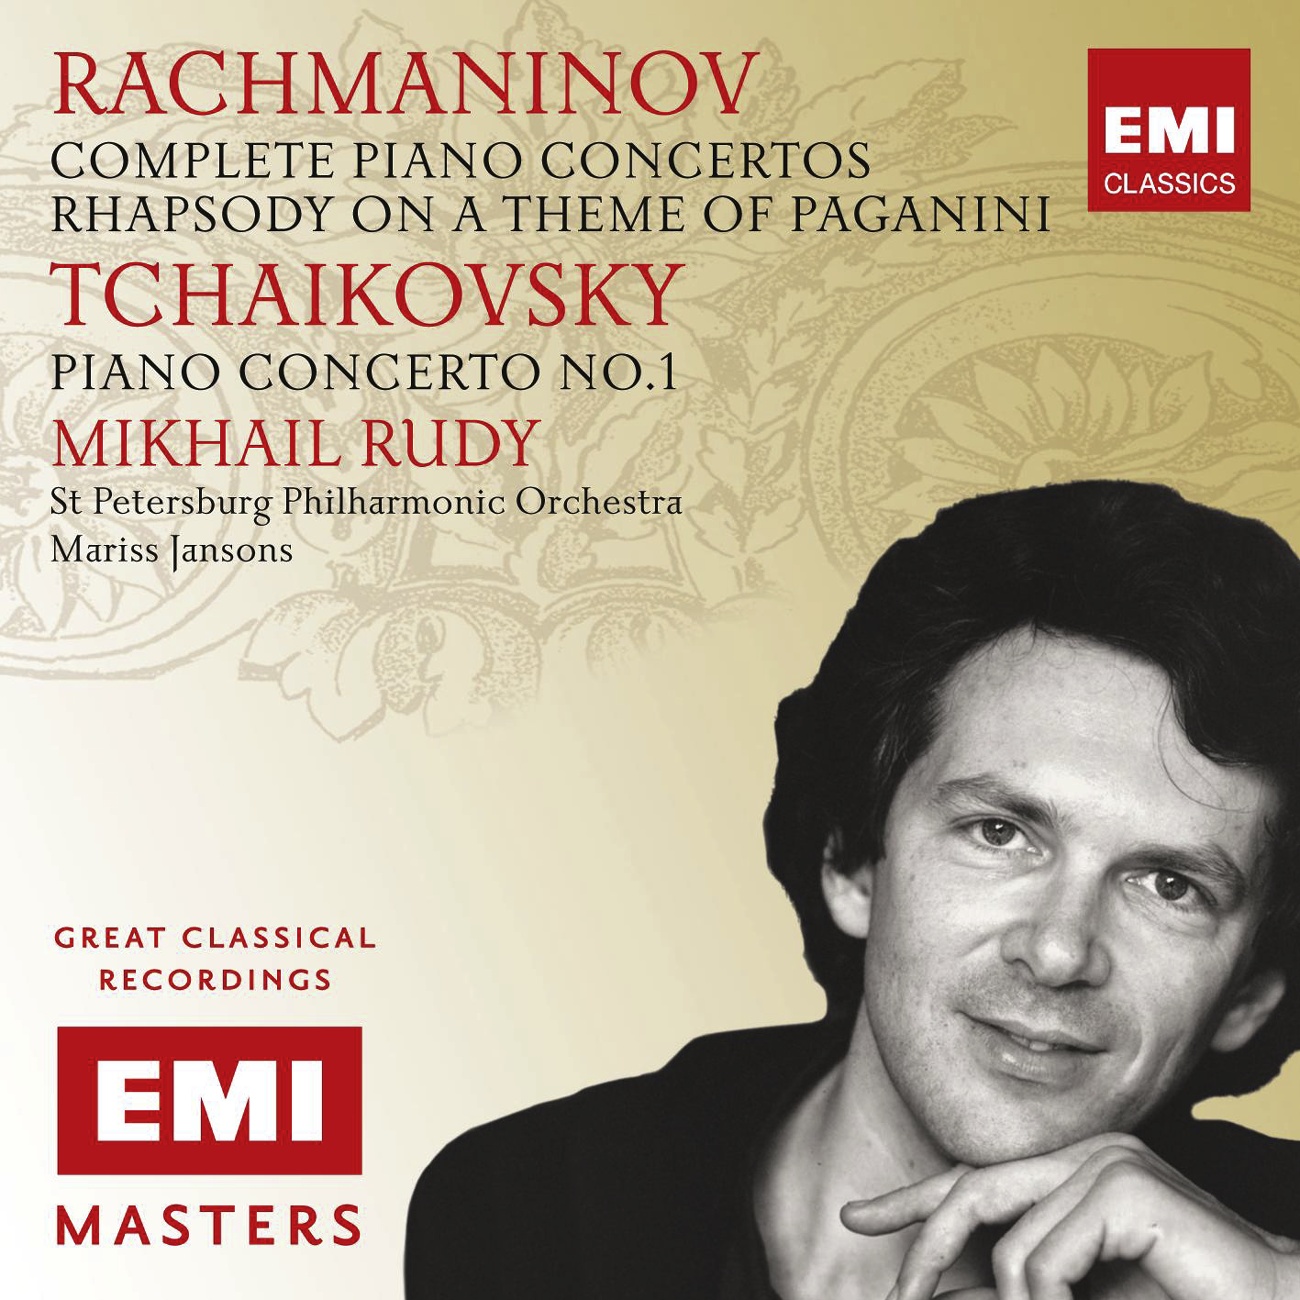 Rhapsody on a Theme of Paganini: Variation XVI - Allegretto